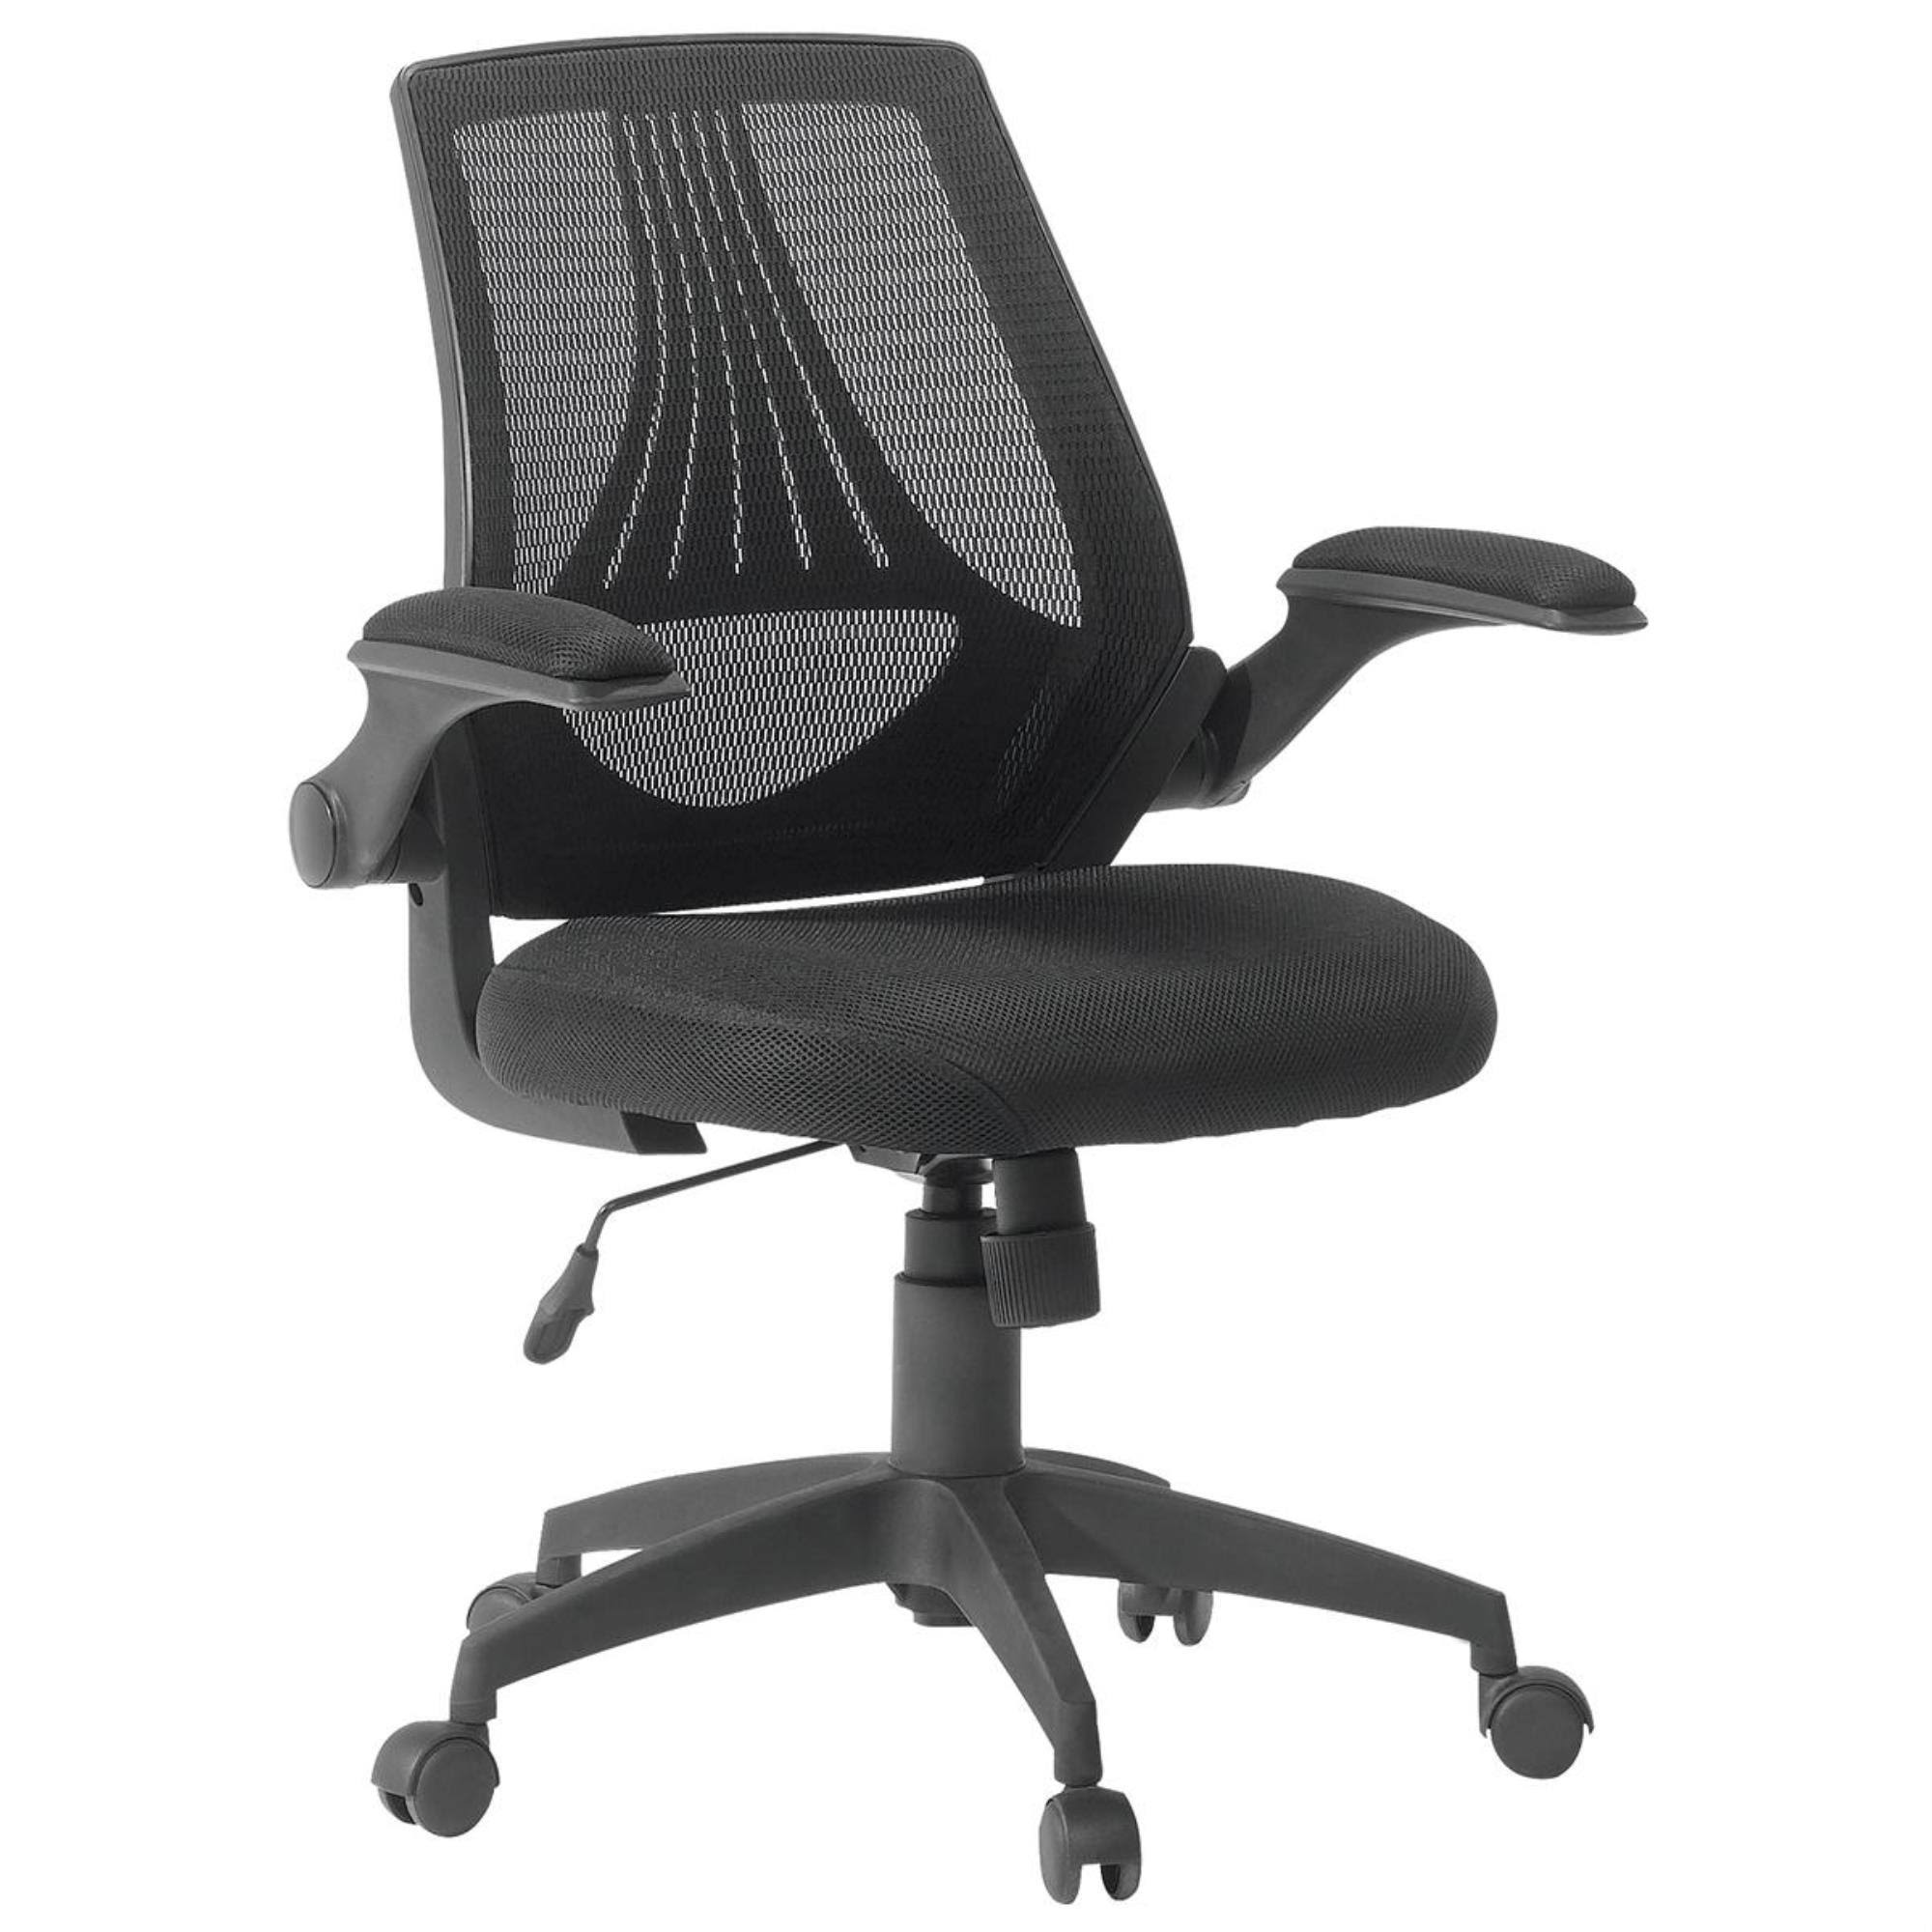 Sauder Gruga Mesh Manager's Chair in Black - Sauder 420268 - WXF-02